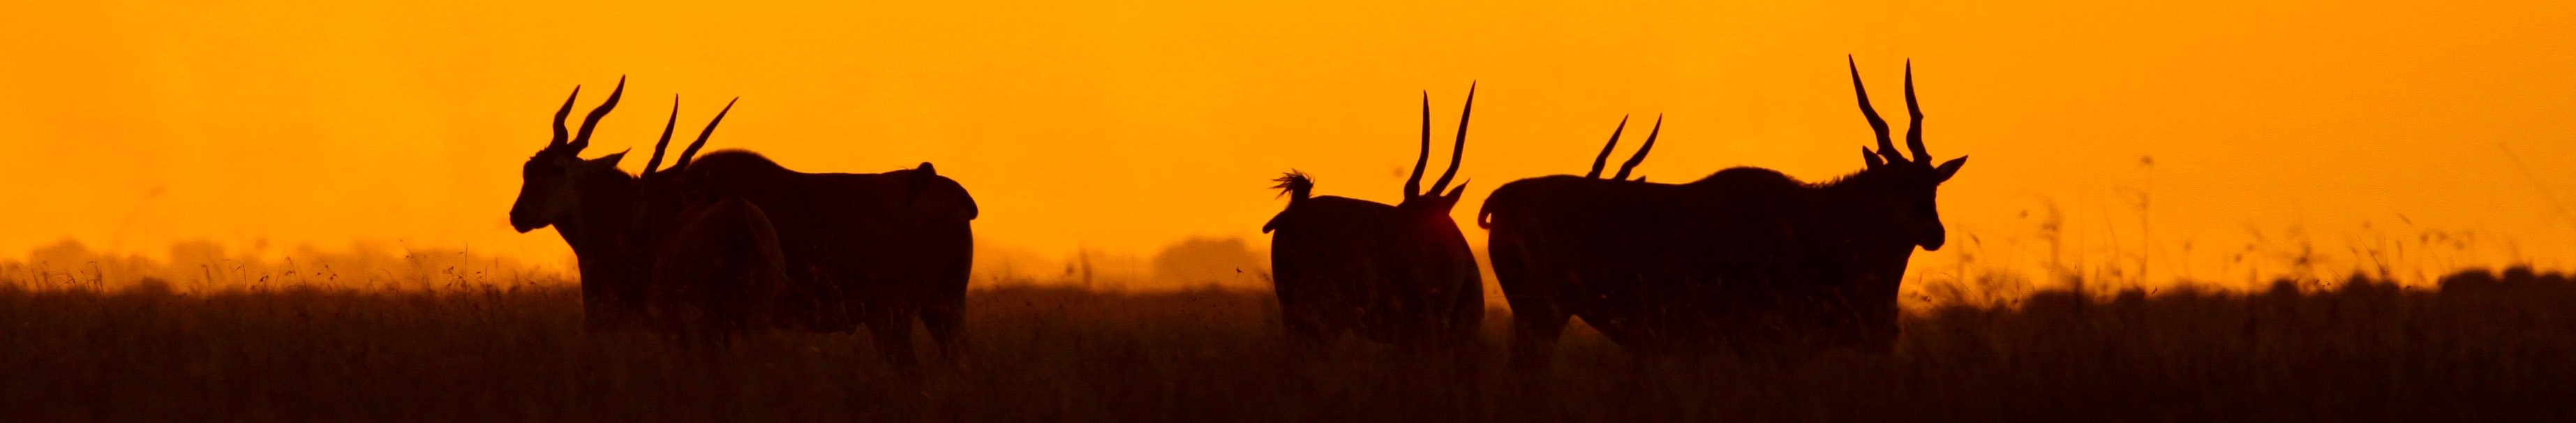 Eland in Nairobi National Park, Kenya | Apex Photo Safaris